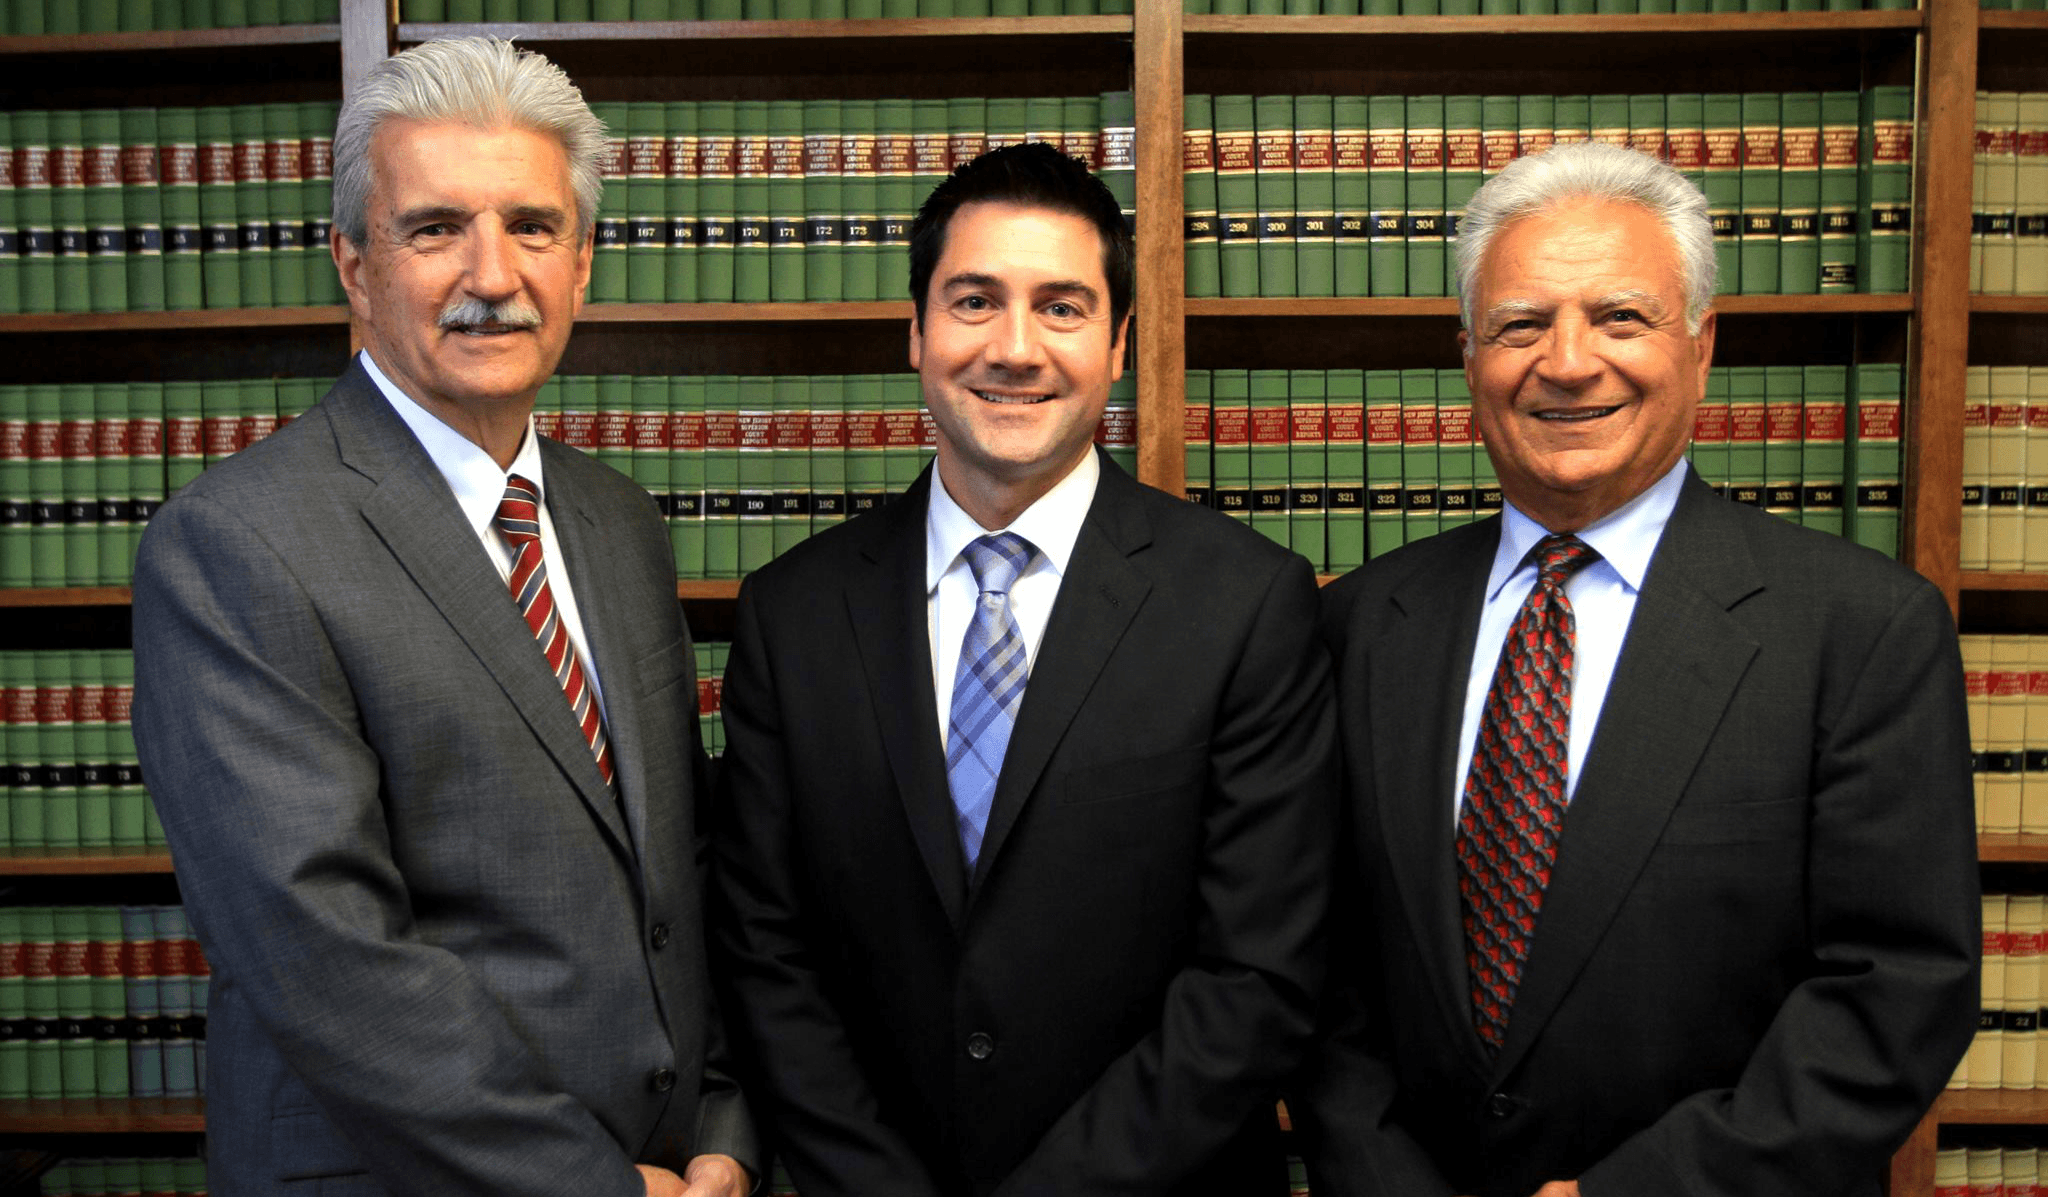 Chiarolanza Deangelis and Digiacomo Attorneys at Law